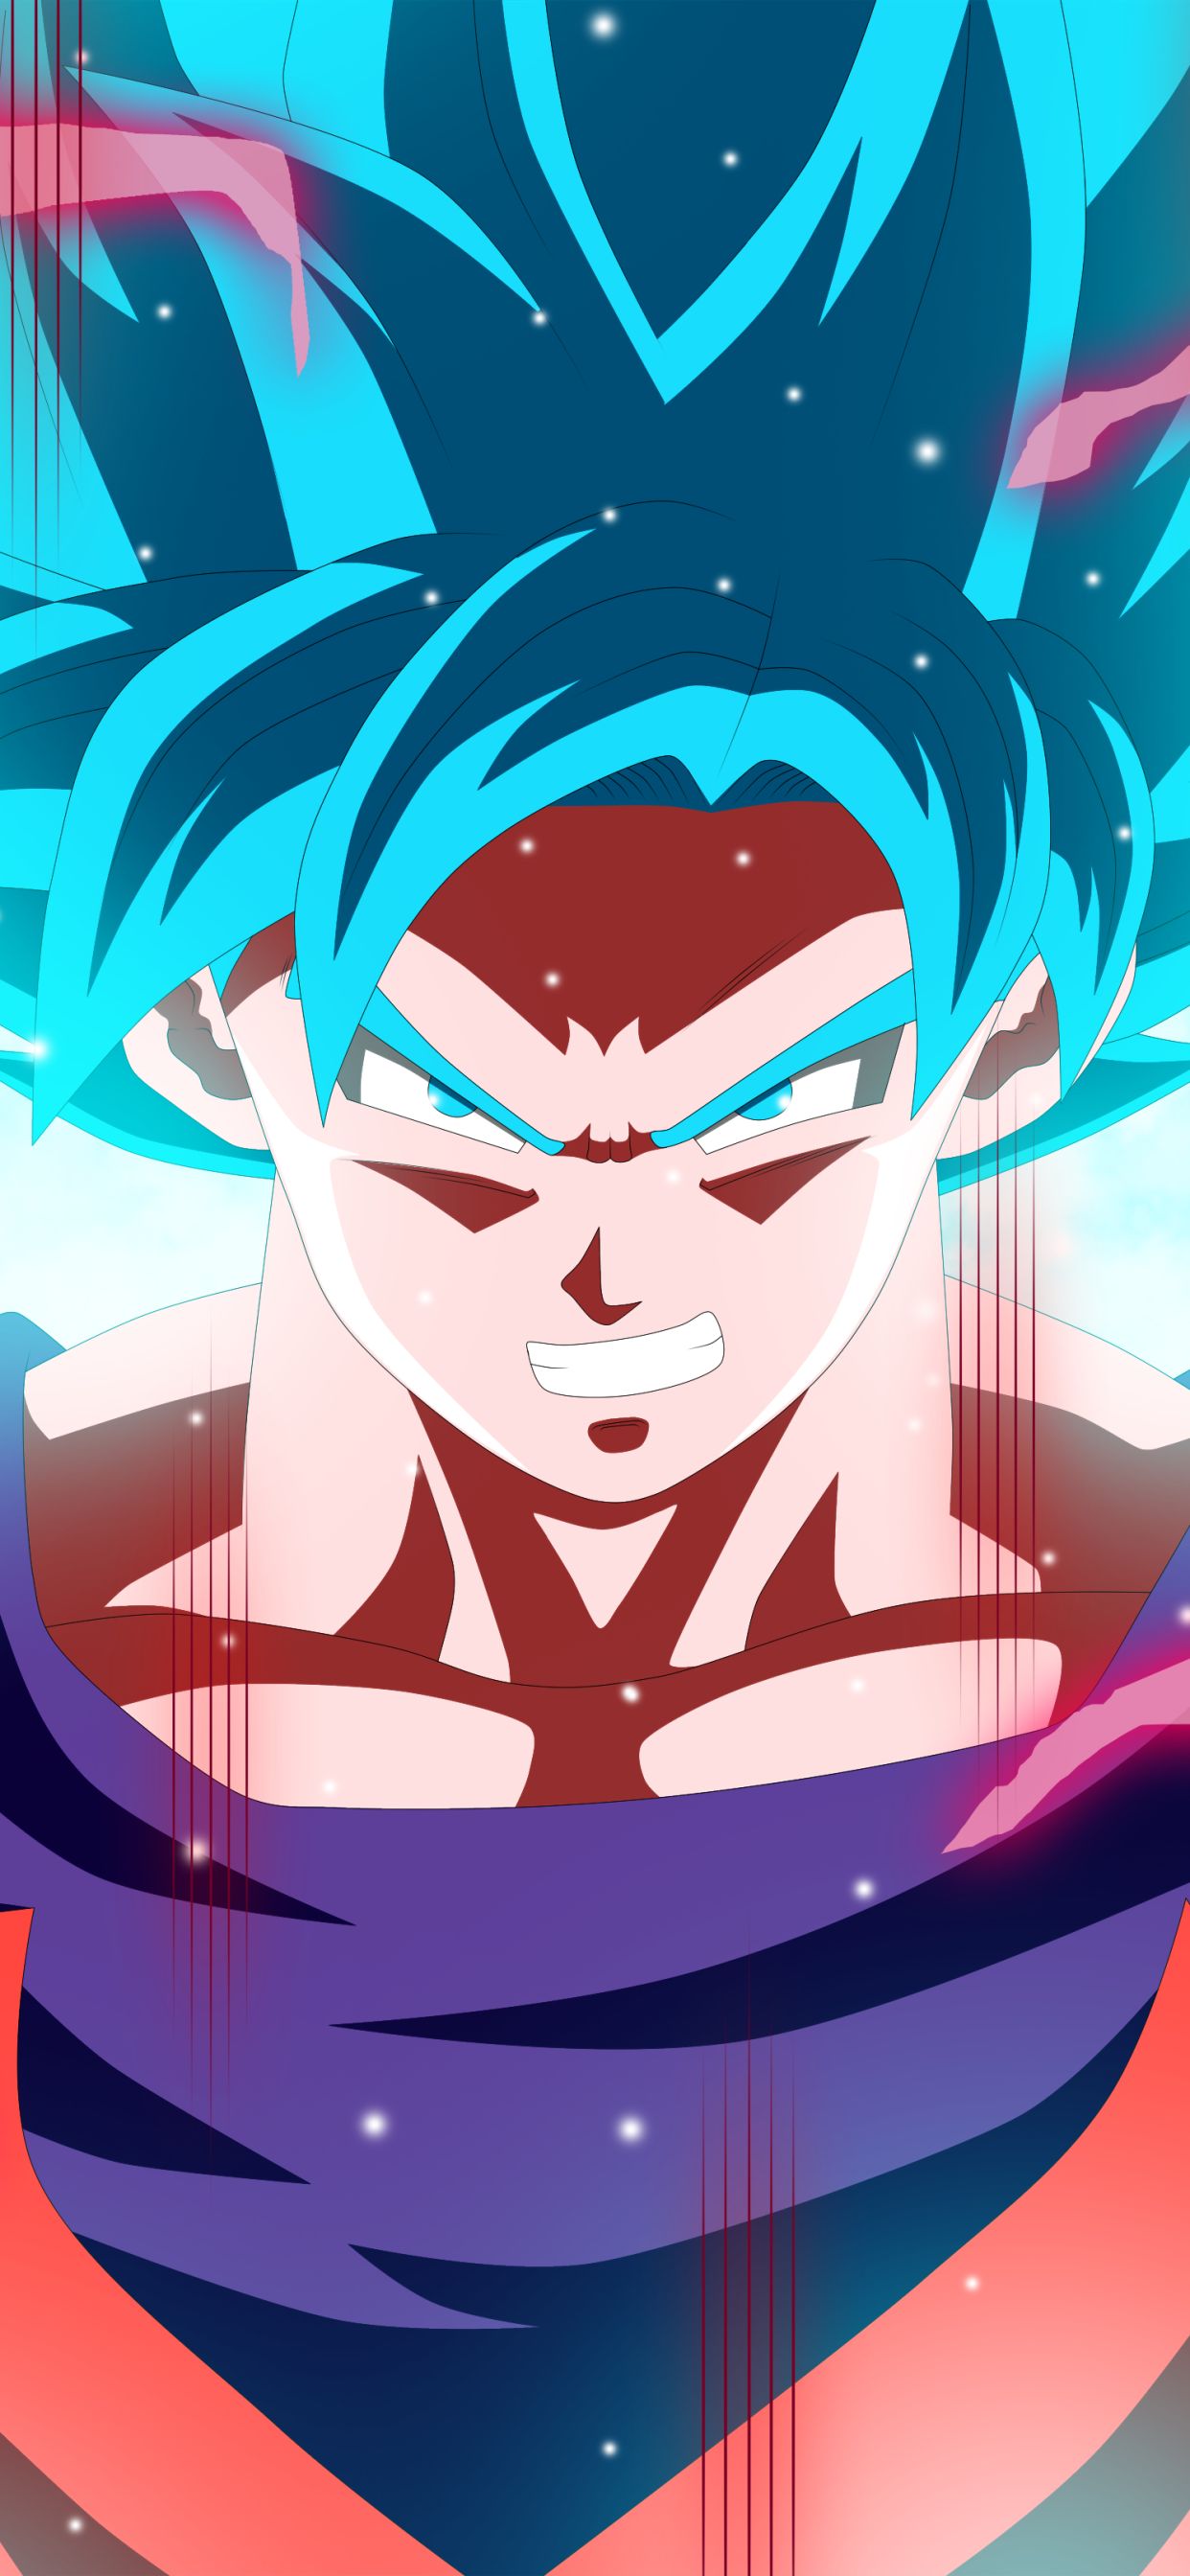 Descarga gratuita de fondo de pantalla para móvil de Esfera Del Dragón, Animado, Goku, Dragon Ball Super, Ssgss Goku.